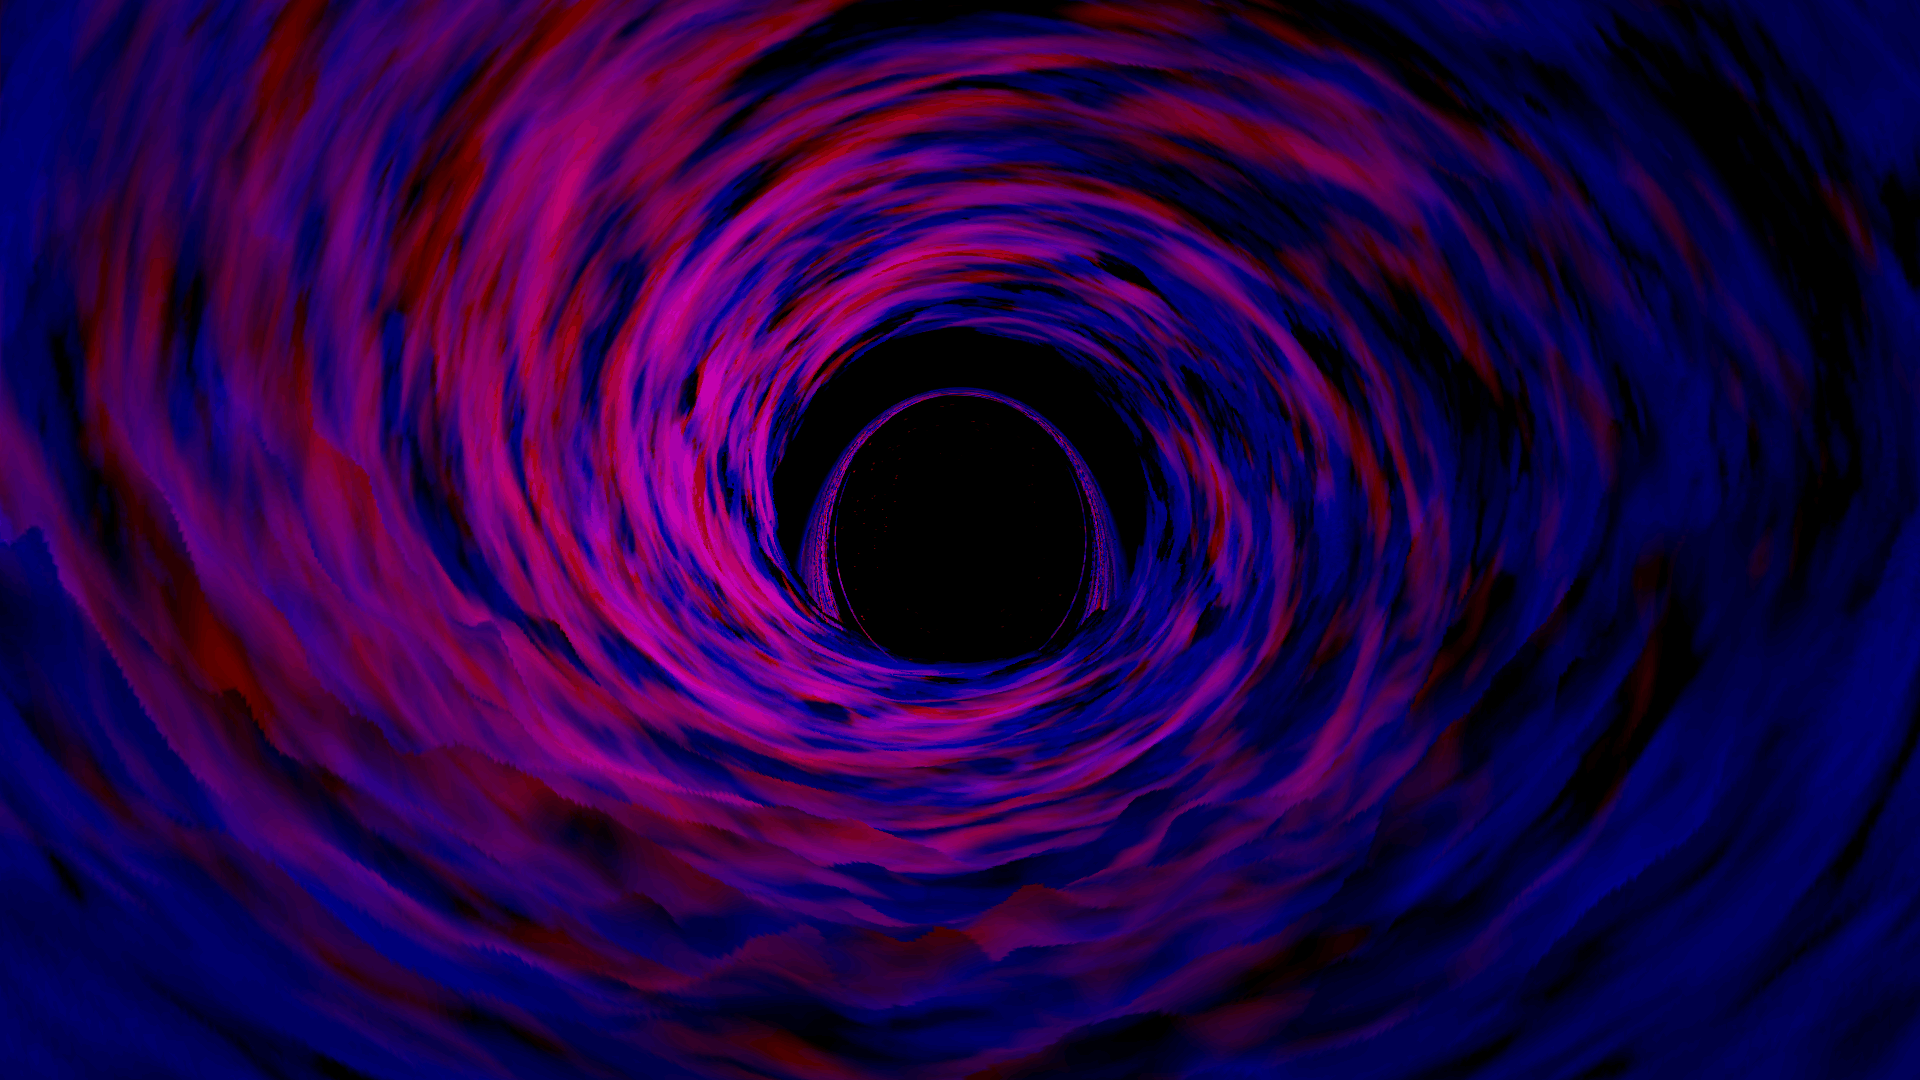 A vortex of blue and purple light surrounding a black hole